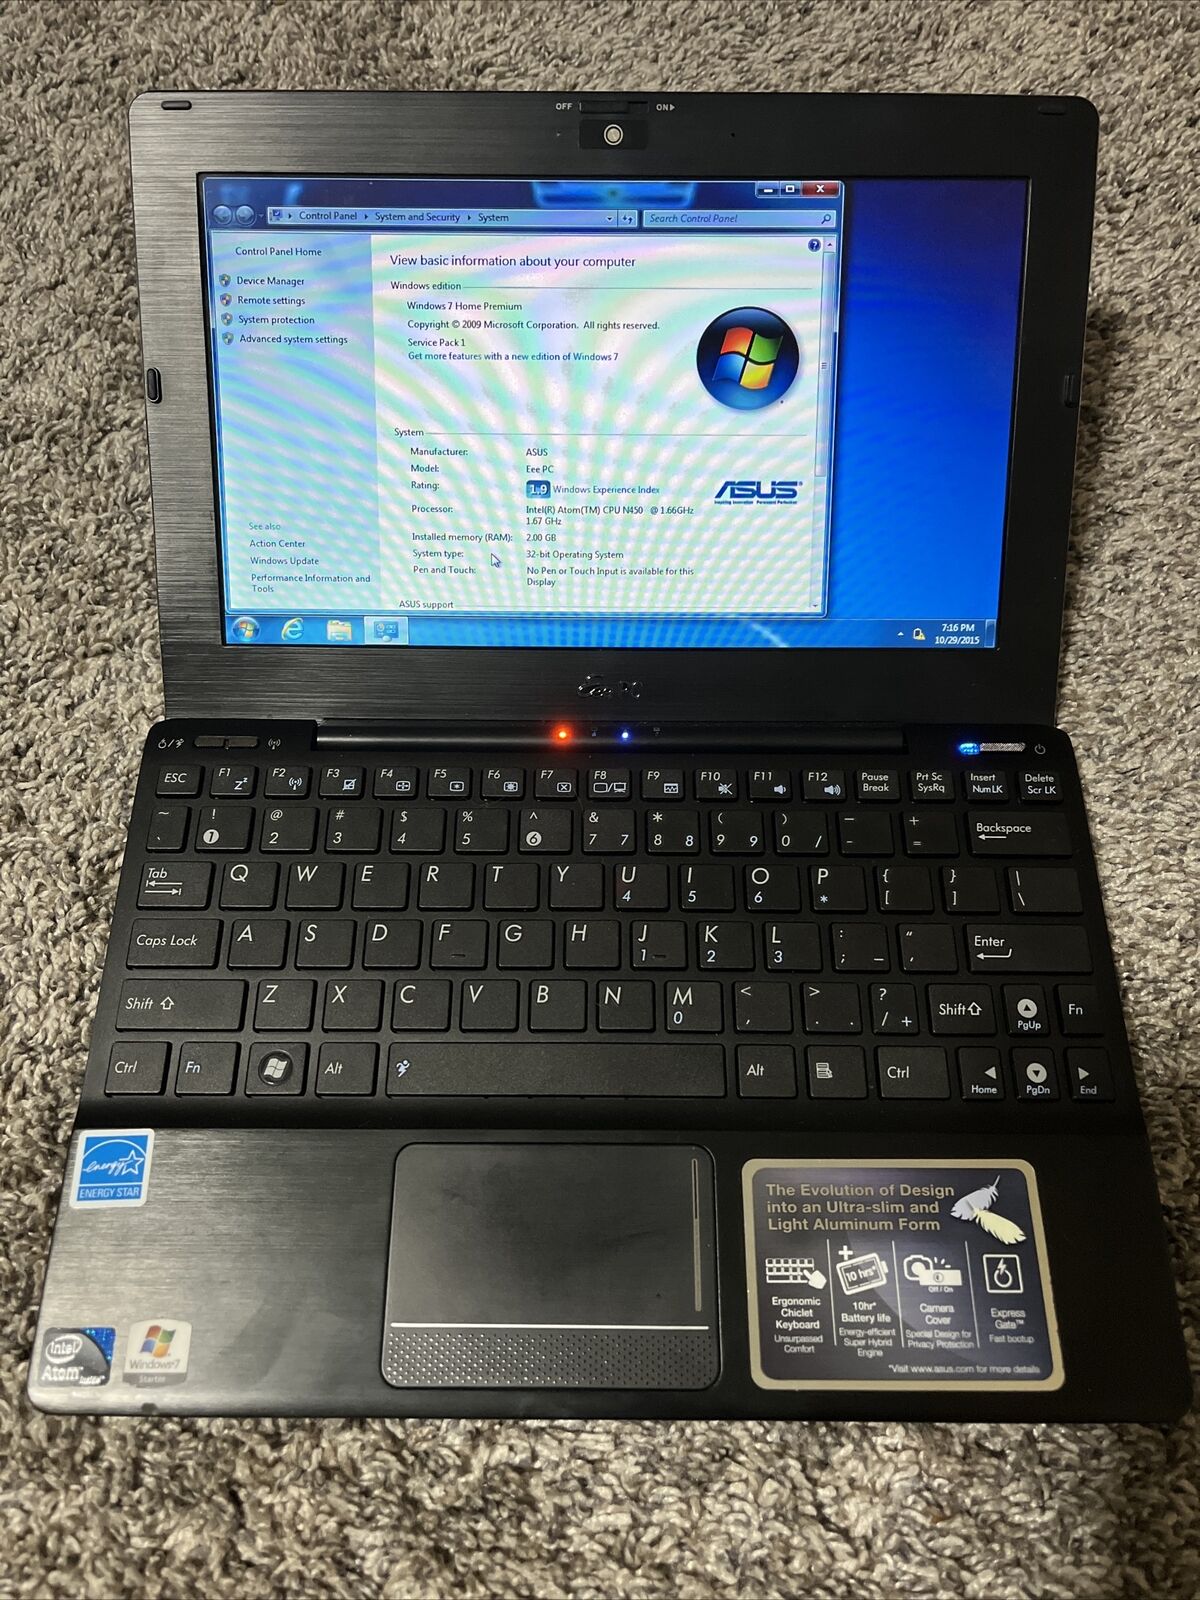 Asus Eee PC 1018P Intel Atom 2GB 250GB Windows XP Netbook Laptop